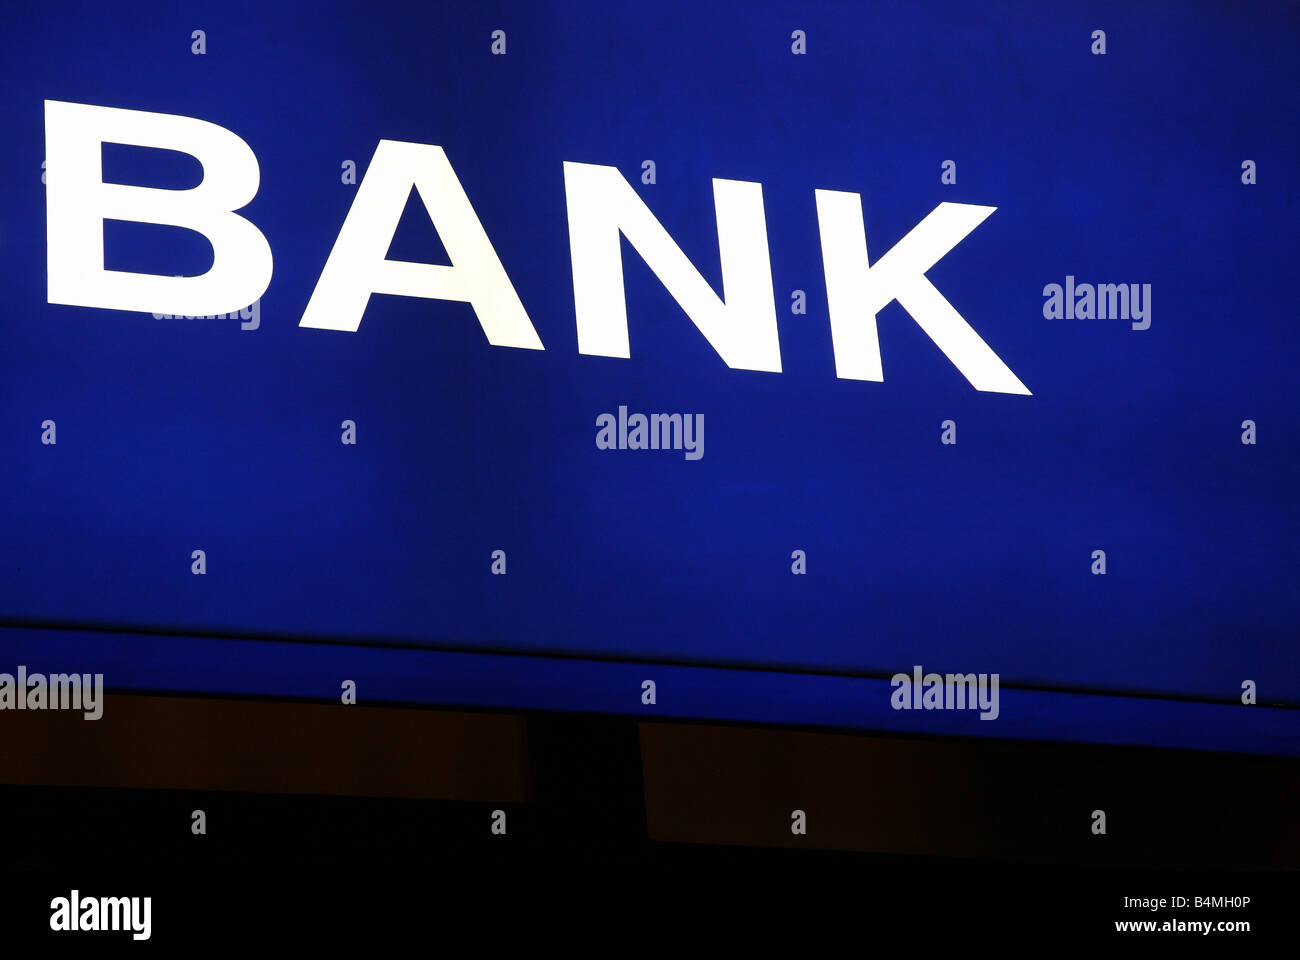 A neon sign BANK Stock Photo